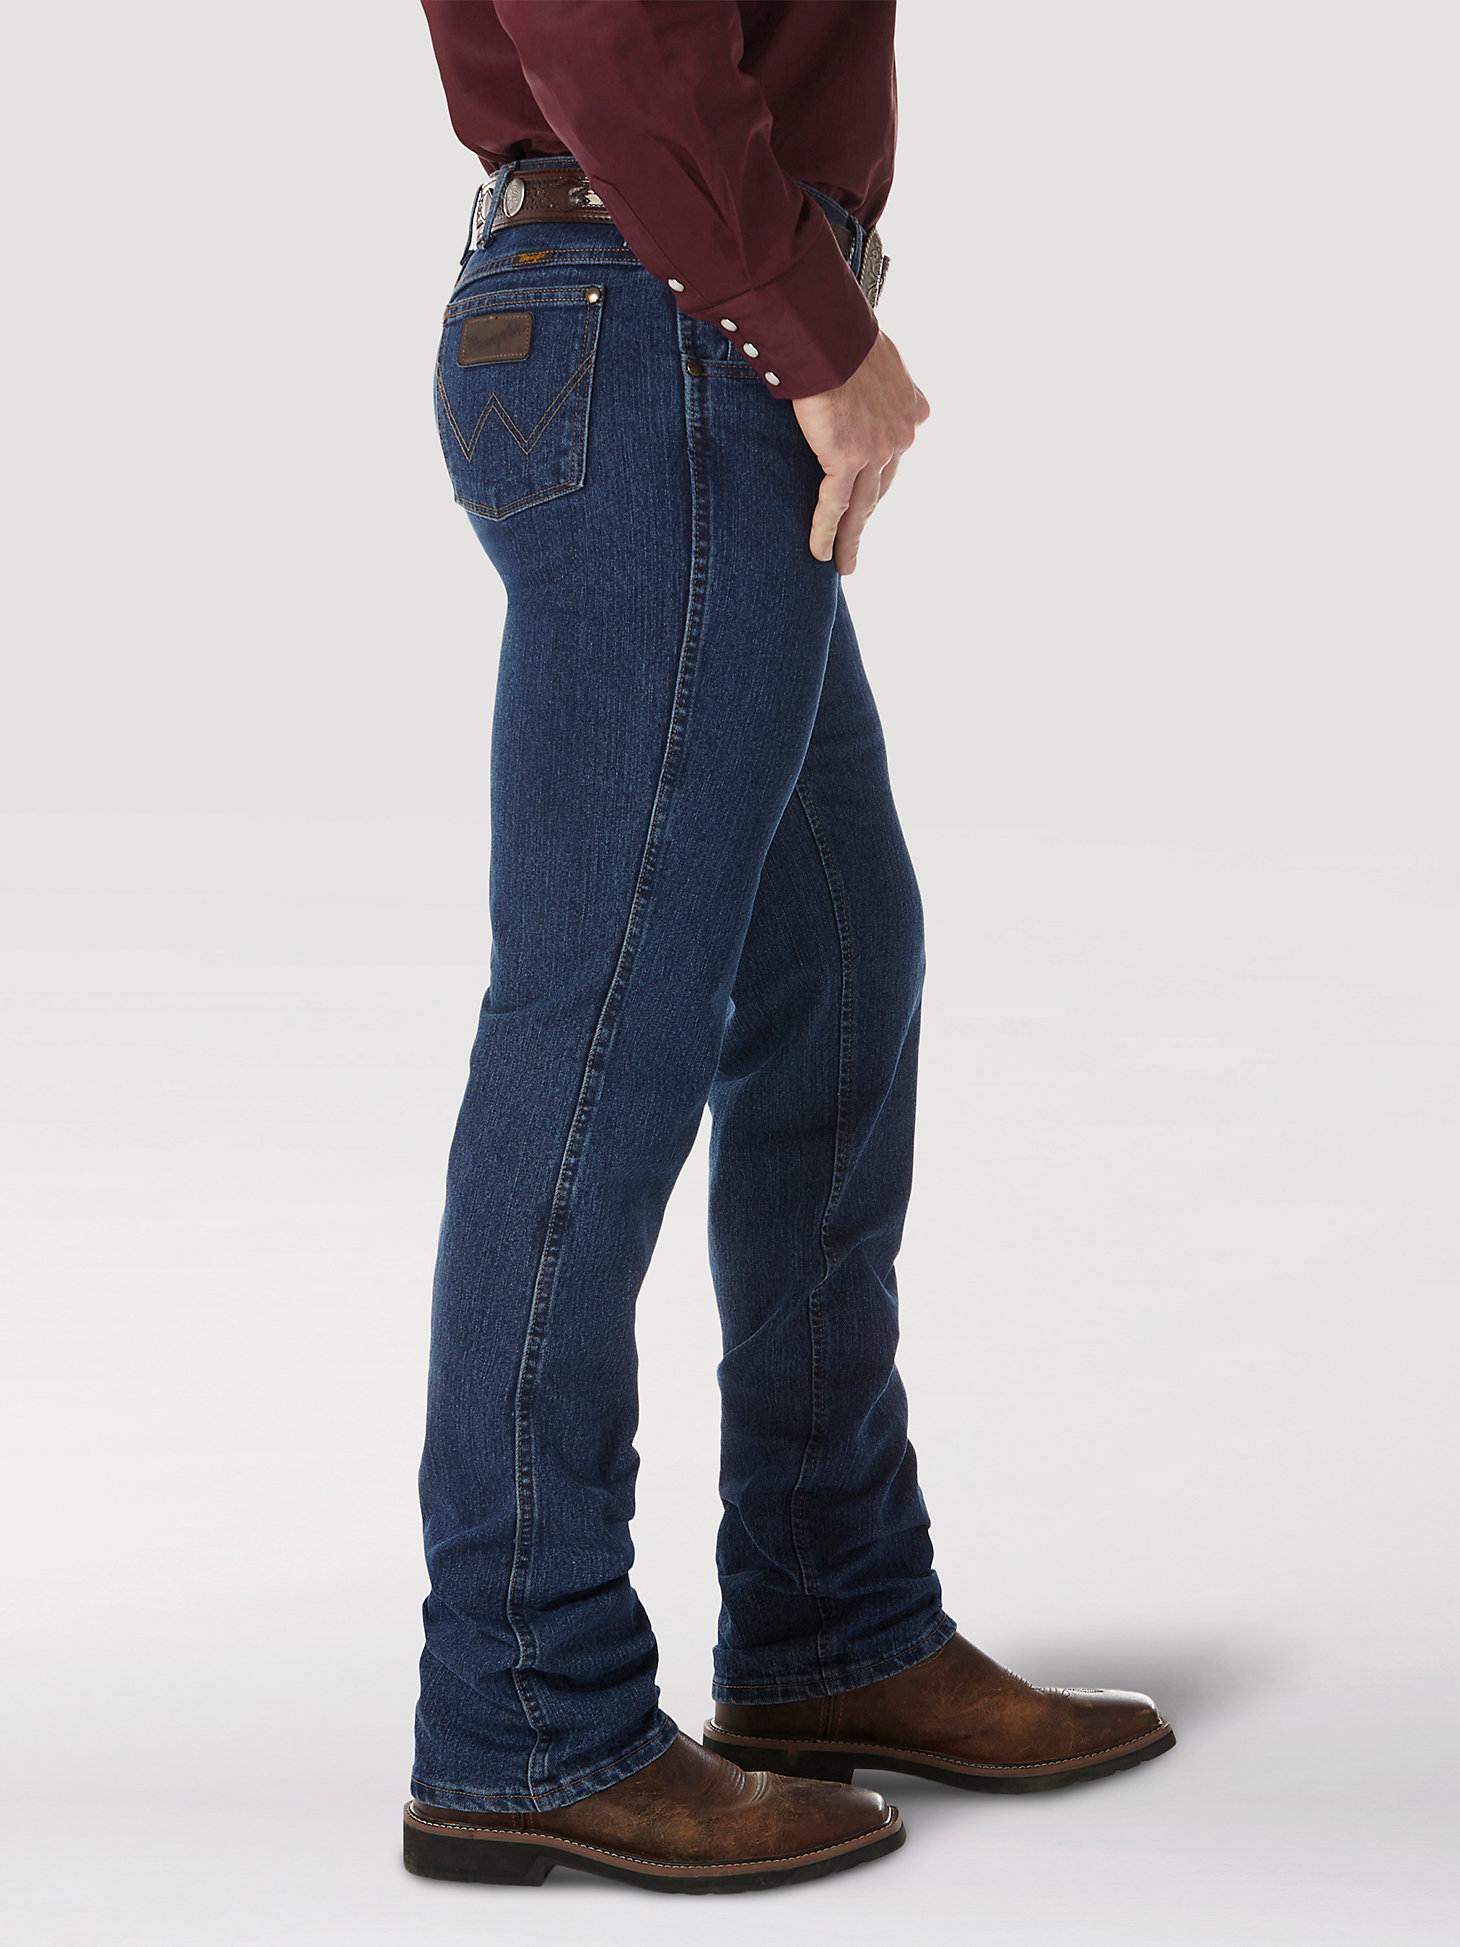 Premium Performance Advanced Comfort Cowboy Cut® Slim Fit Jean in MS Wash alternative view 1